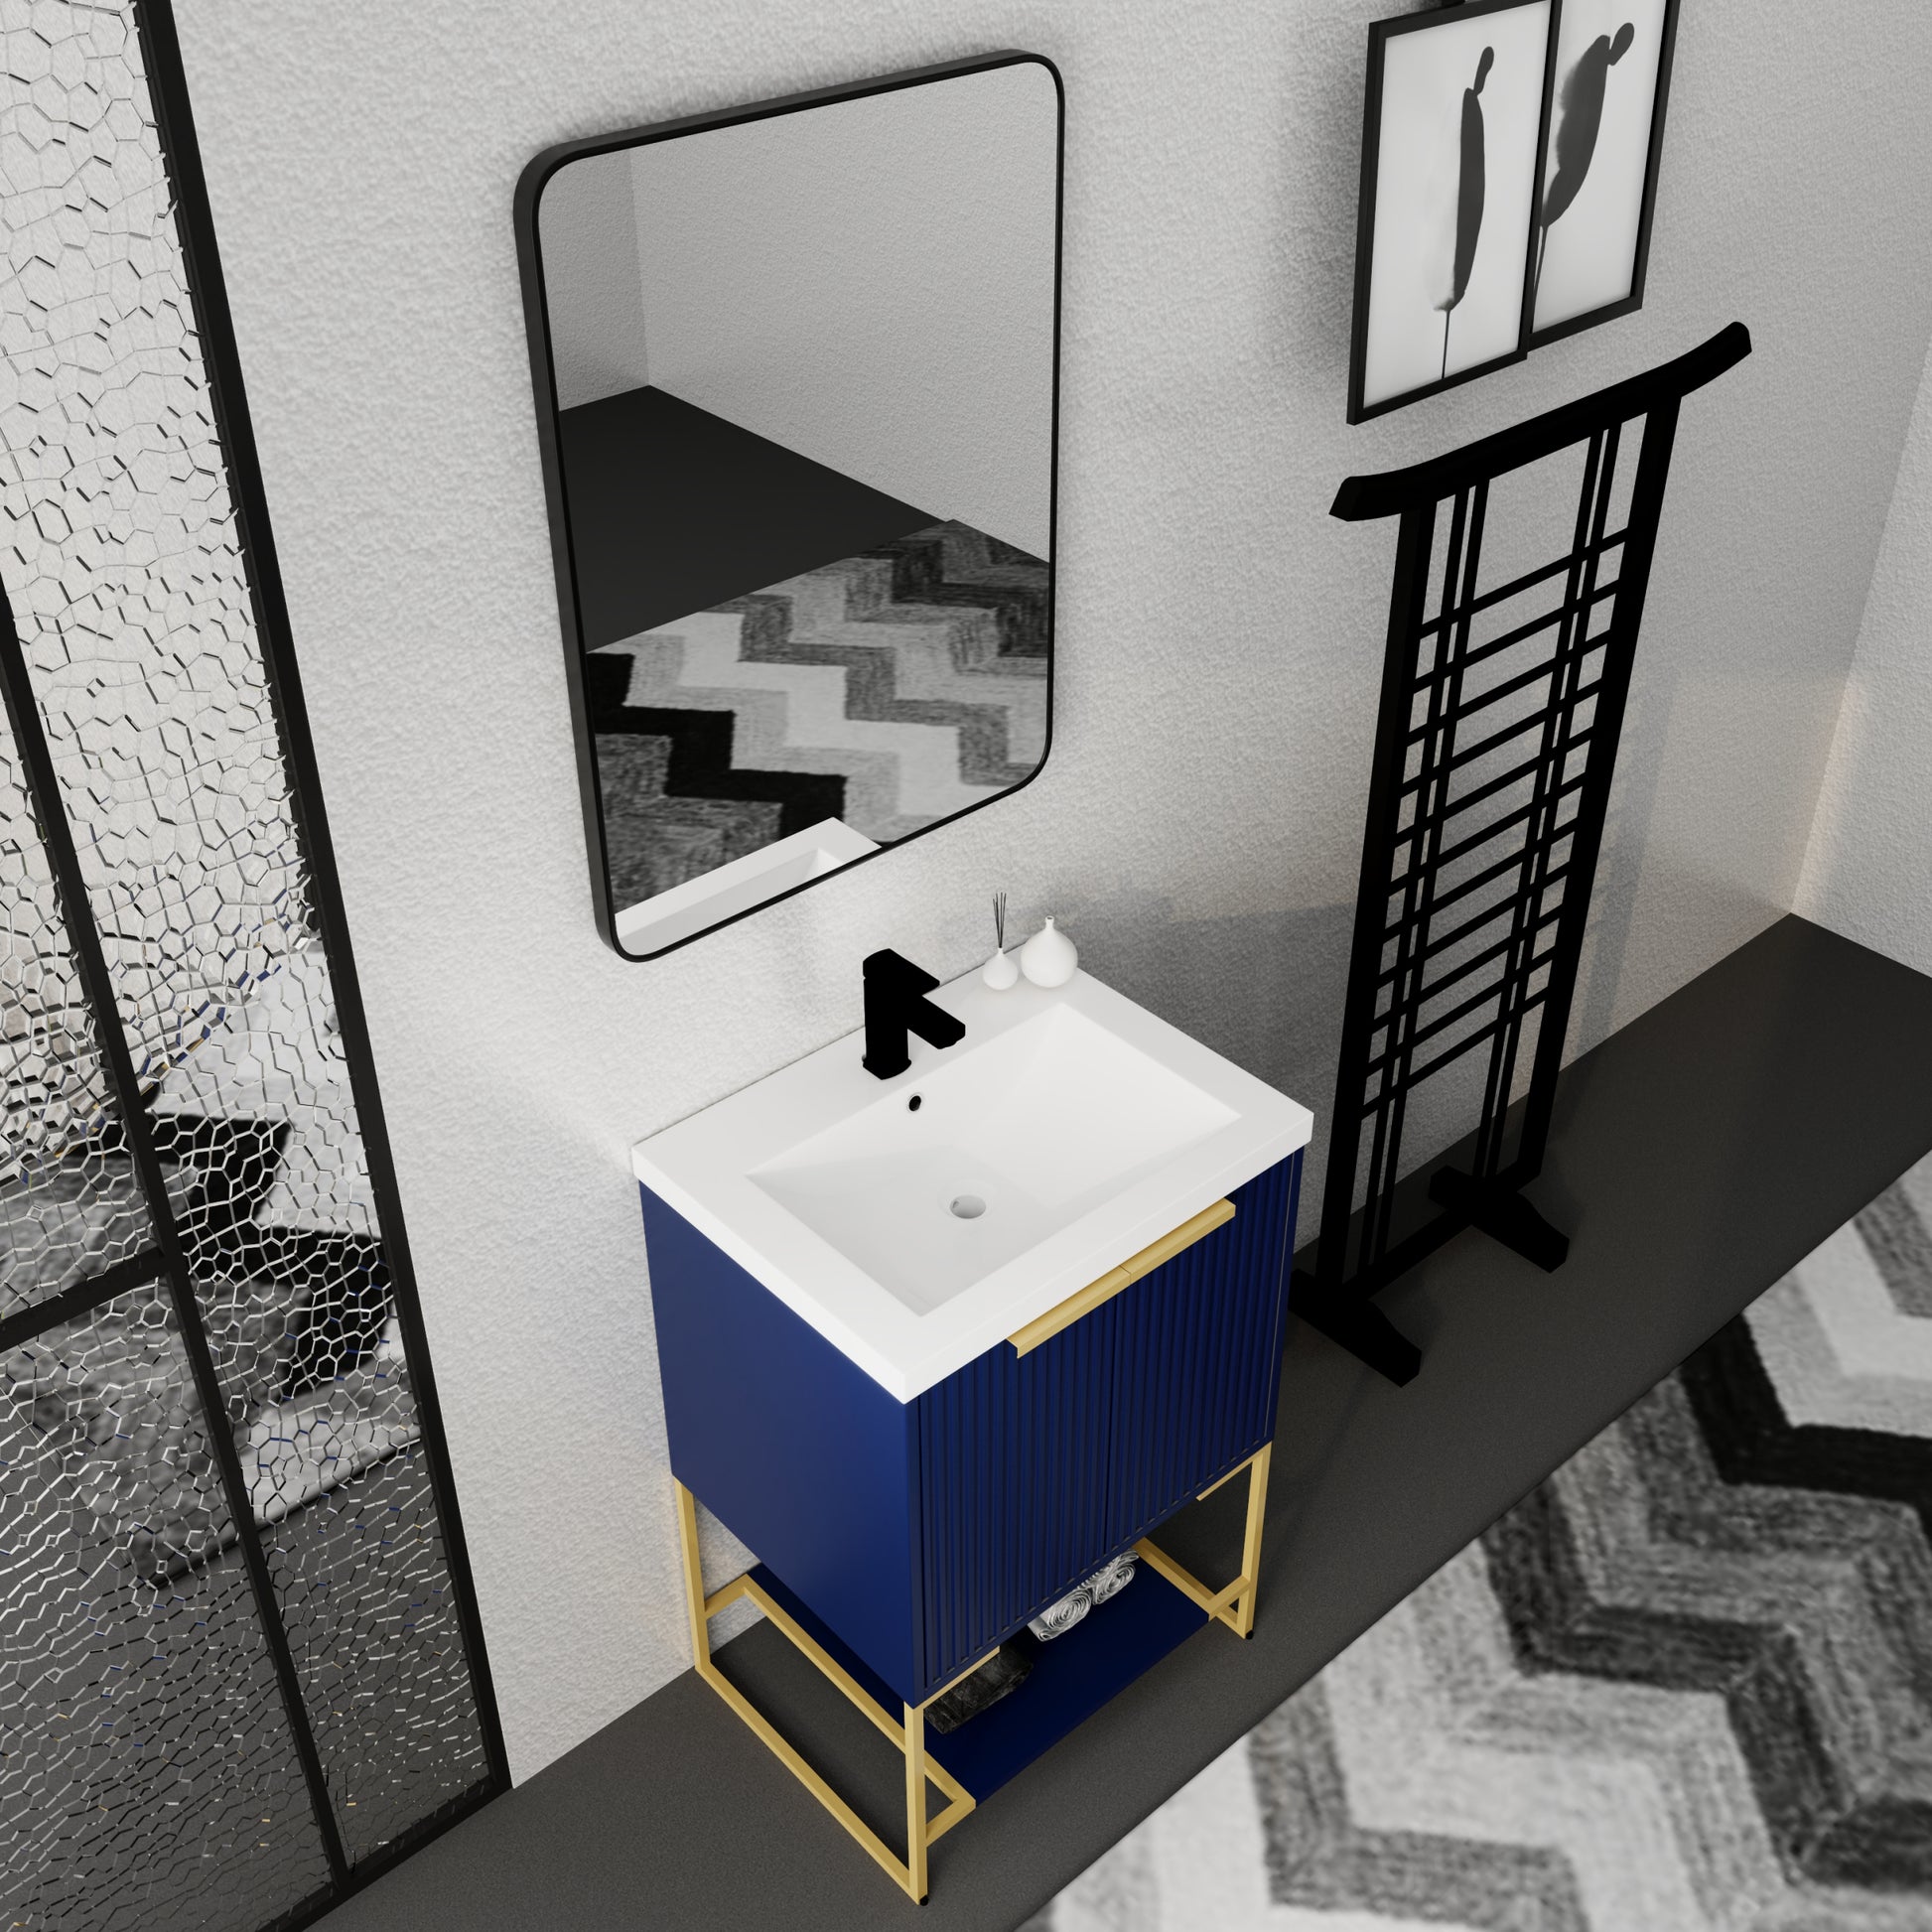 24 Inch Freestanding Bathroom Vanity With Resin navy blue-plywood